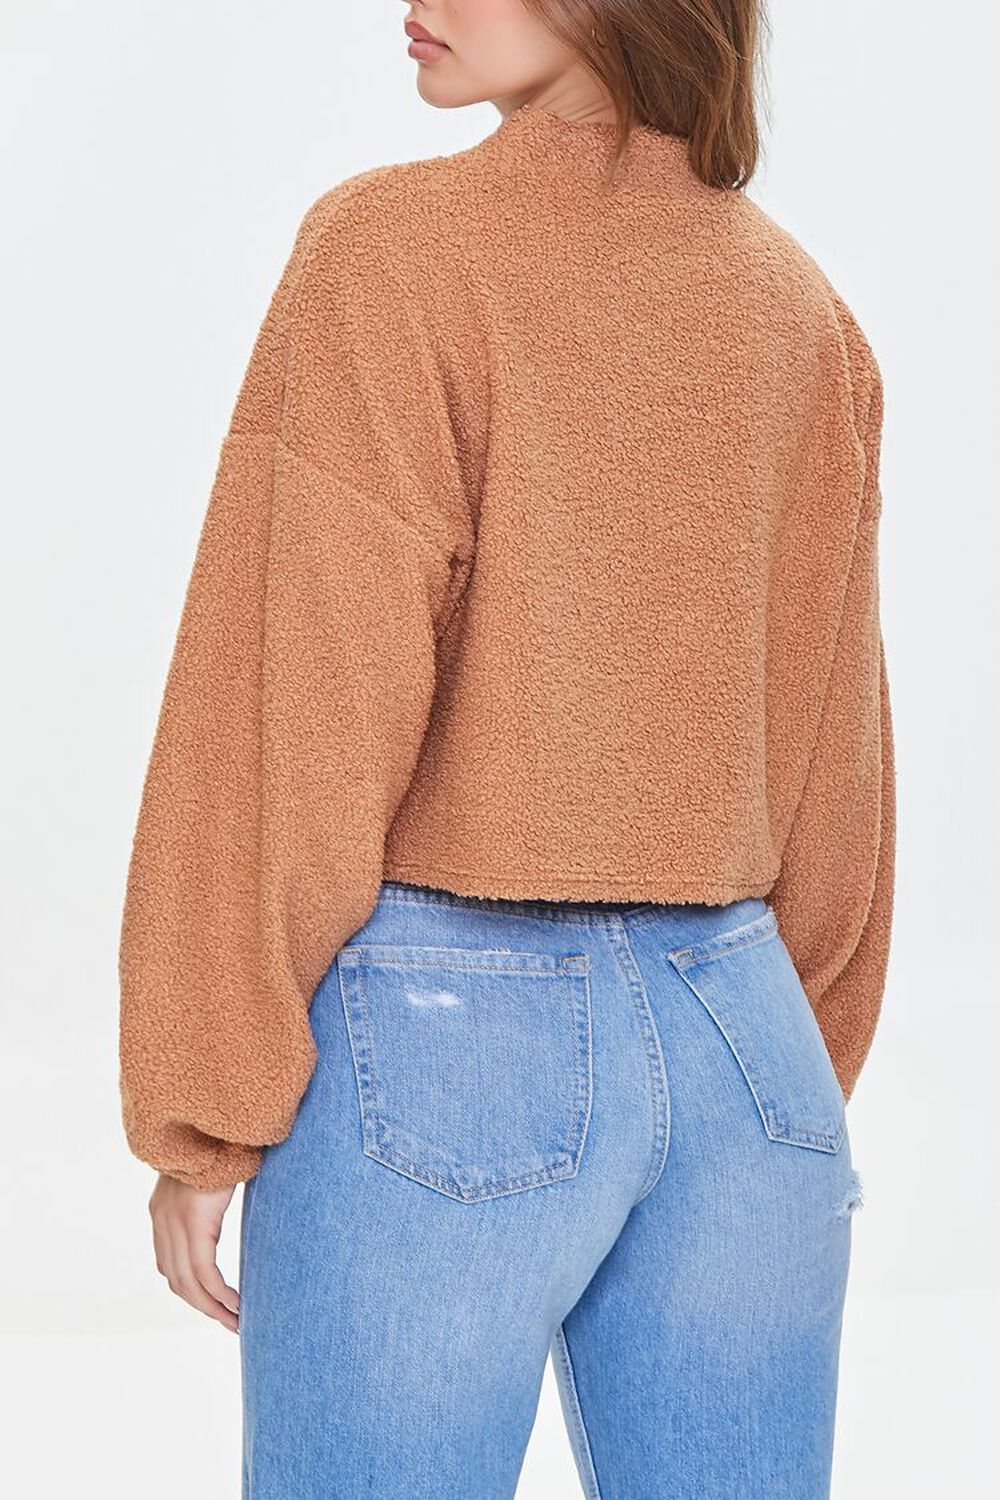 Boucle Knit Cardigan Sweater, image 3